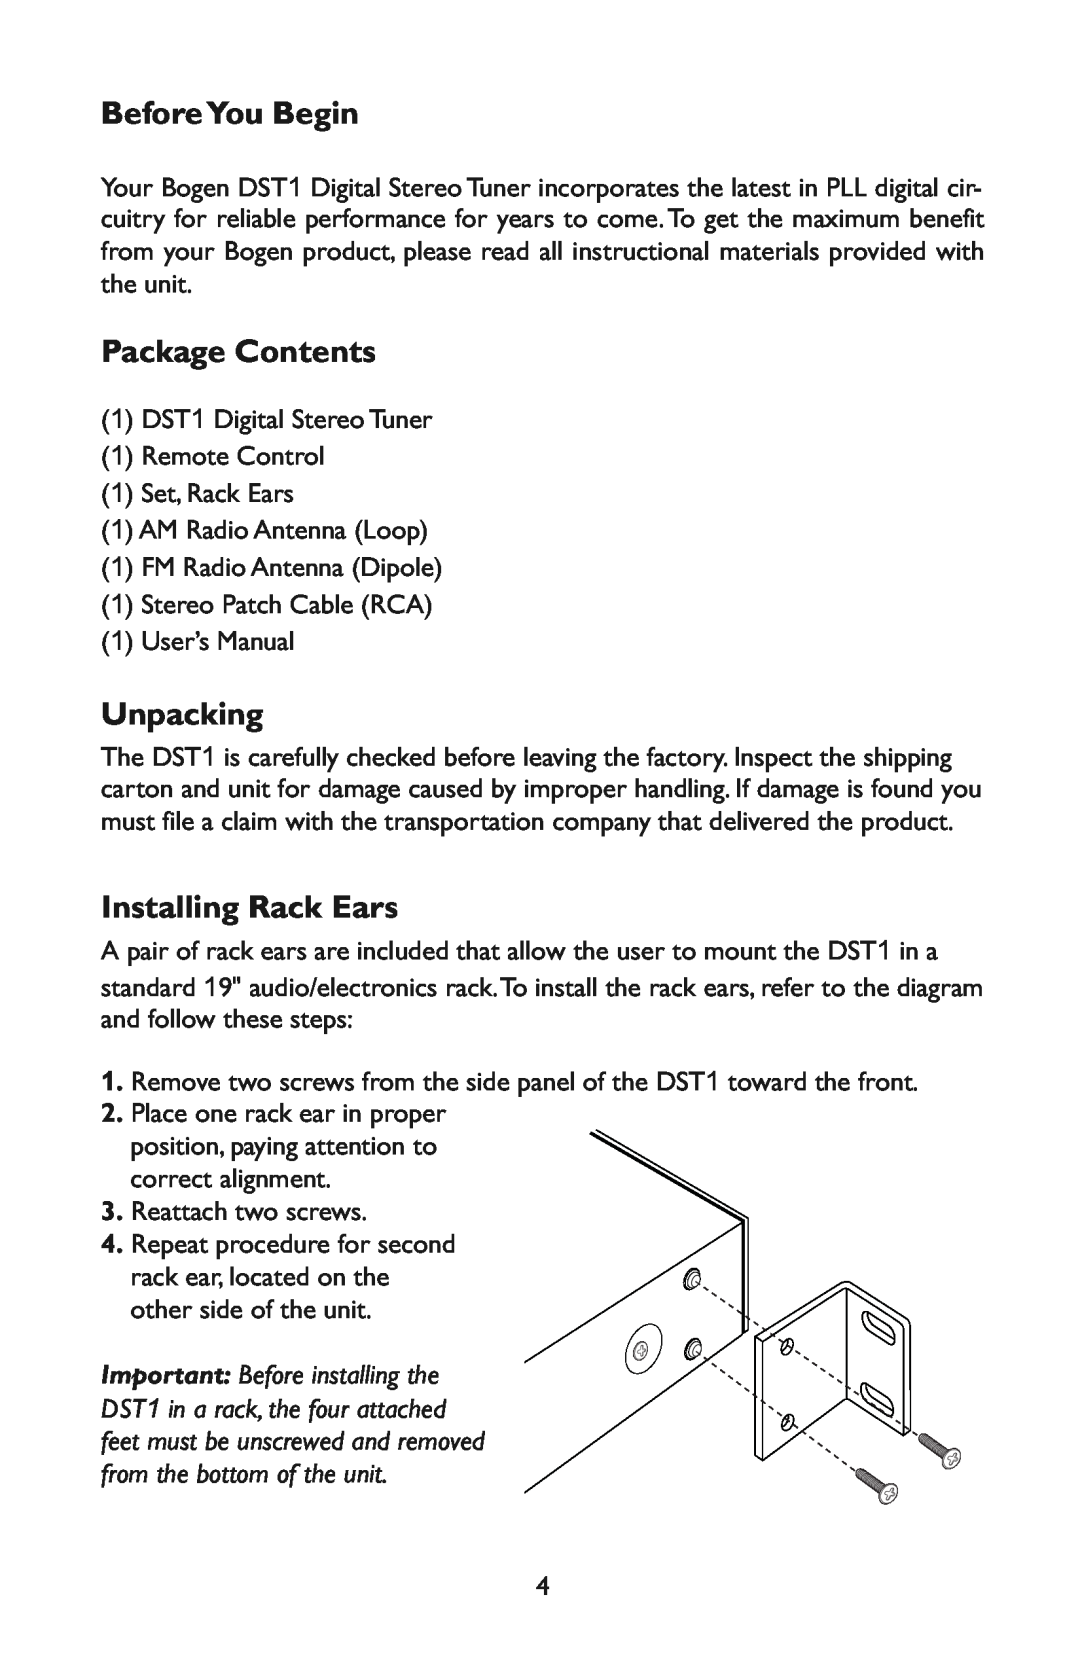 Bogen DST1 specifications BeforeYou Begin, Package Contents, Unpacking, Installing Rack Ears 